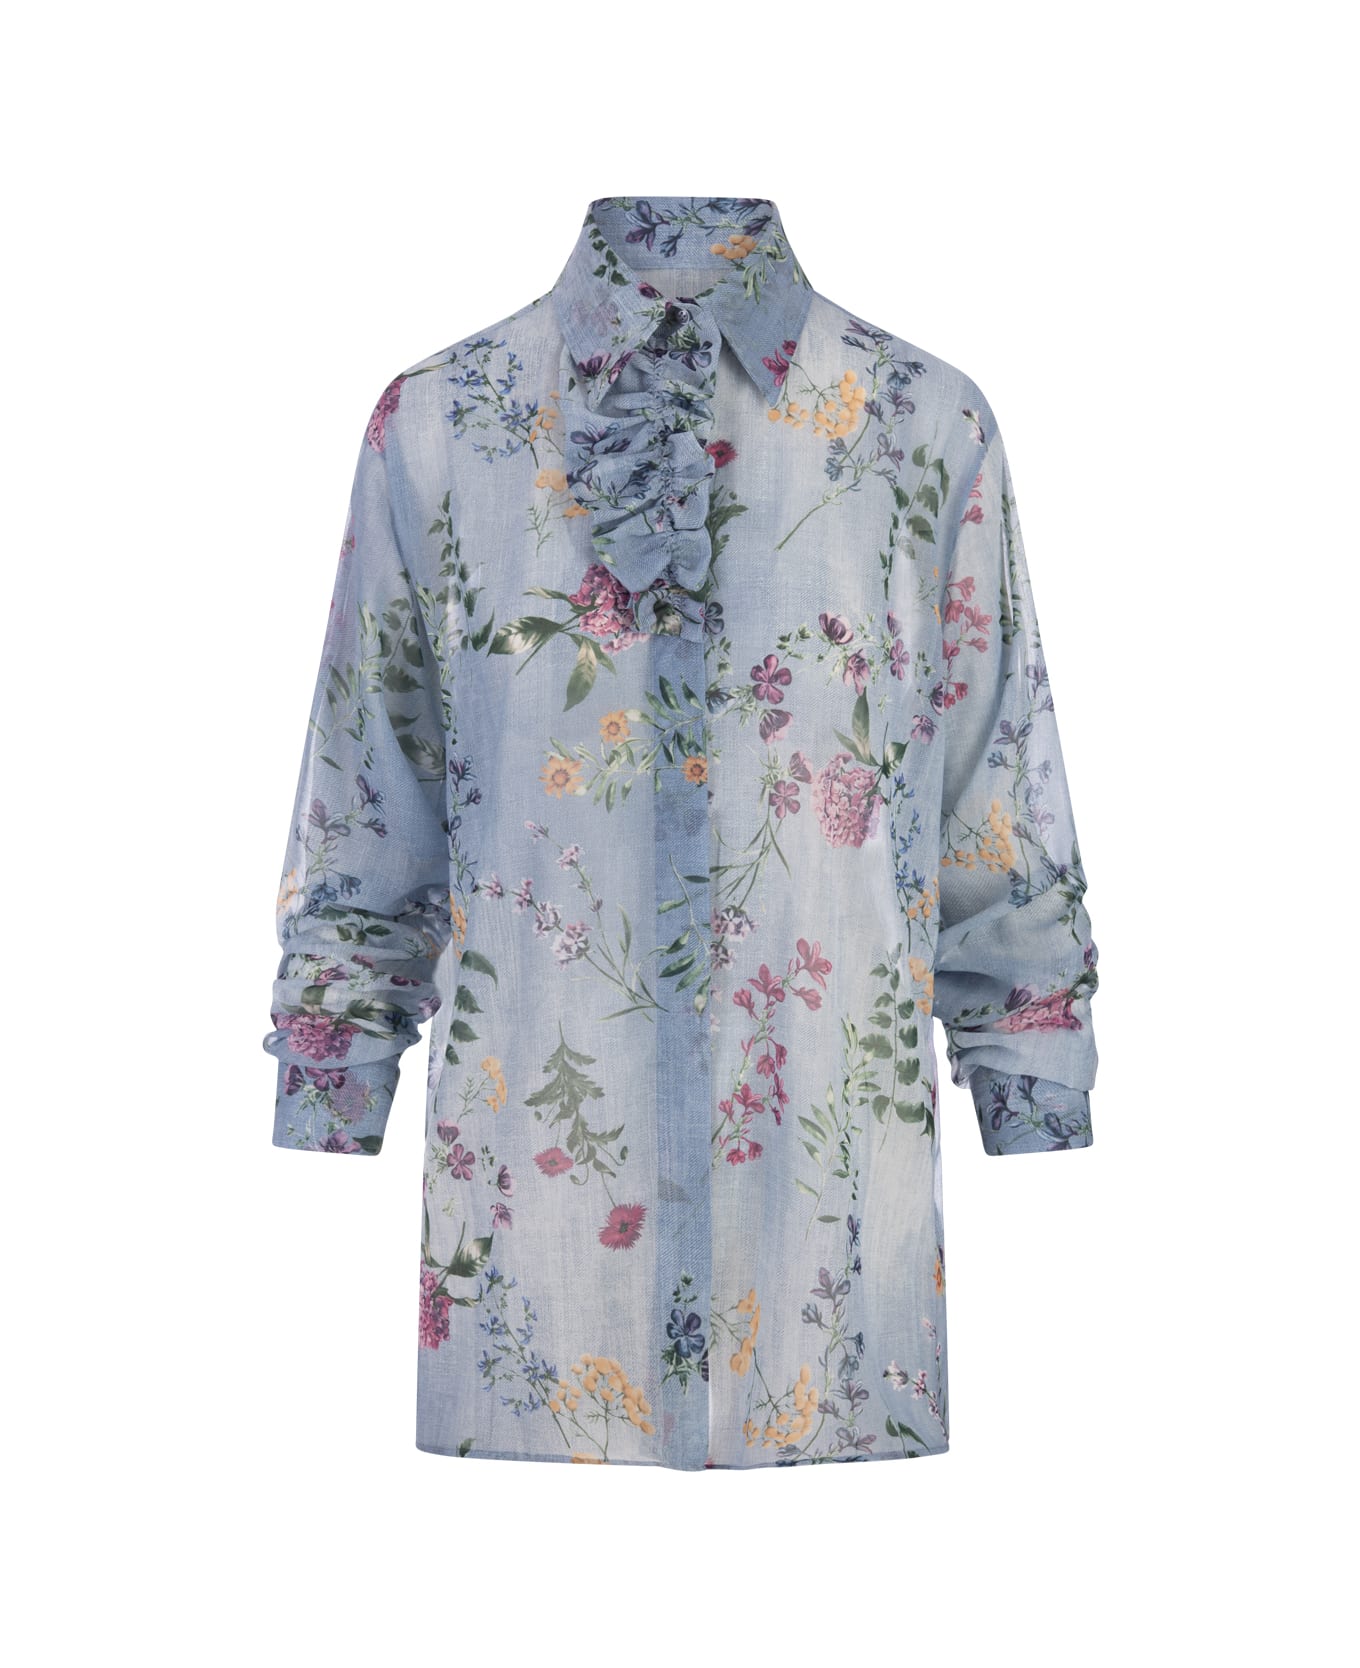 Ermanno Scervino Soft Shirt With Floral Print - Blue